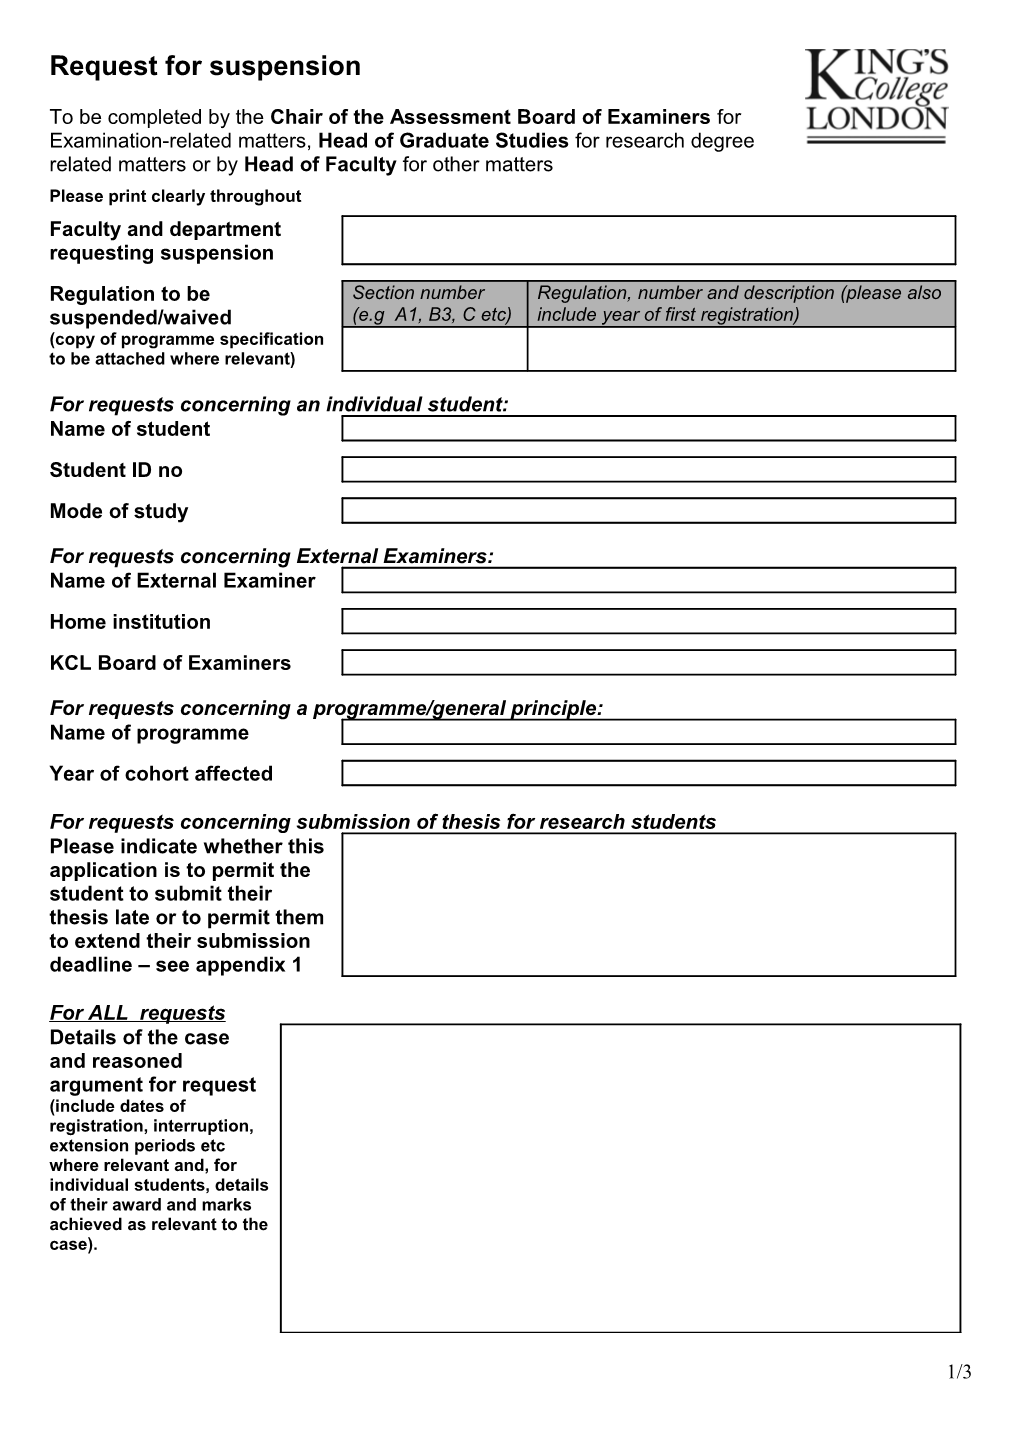 Request for Suspension Form 2013-14